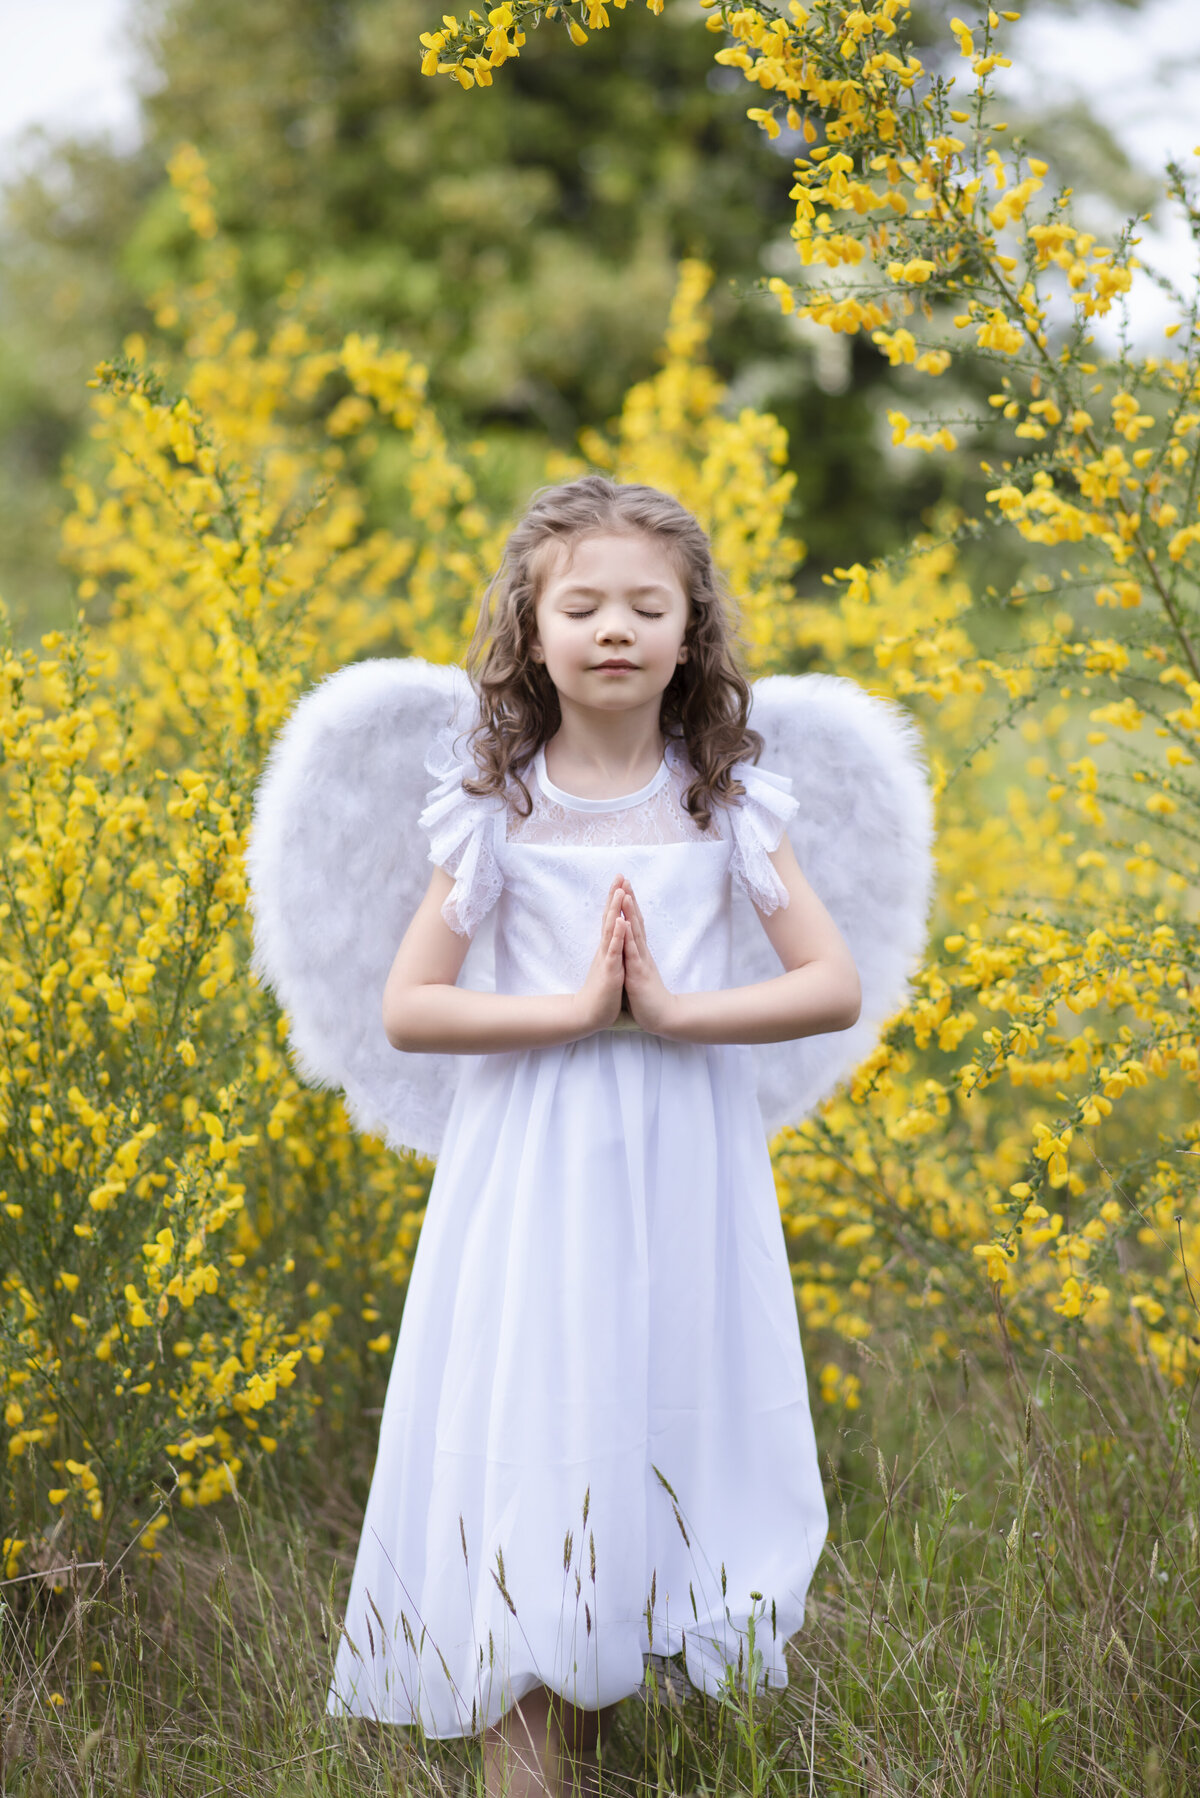 Angel praying in field of yellow flowers